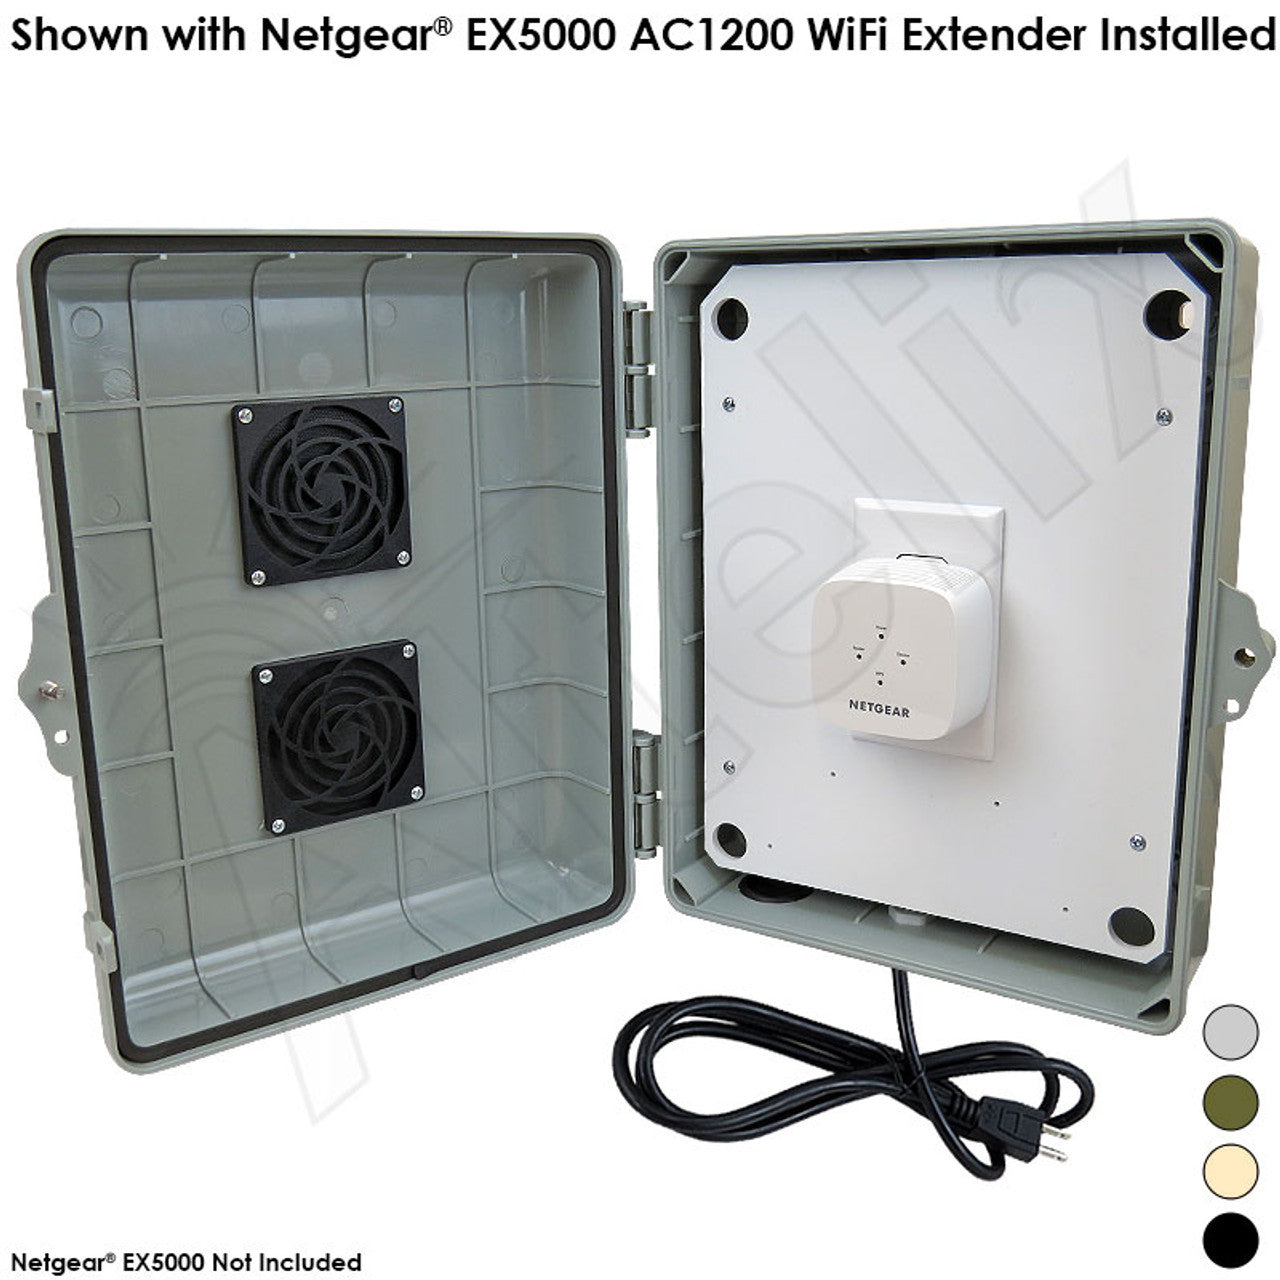 Altelix Weatherproof Vented WiFi Enclosure for Netgear® EX5000 AC1200 WiFi Extender-1